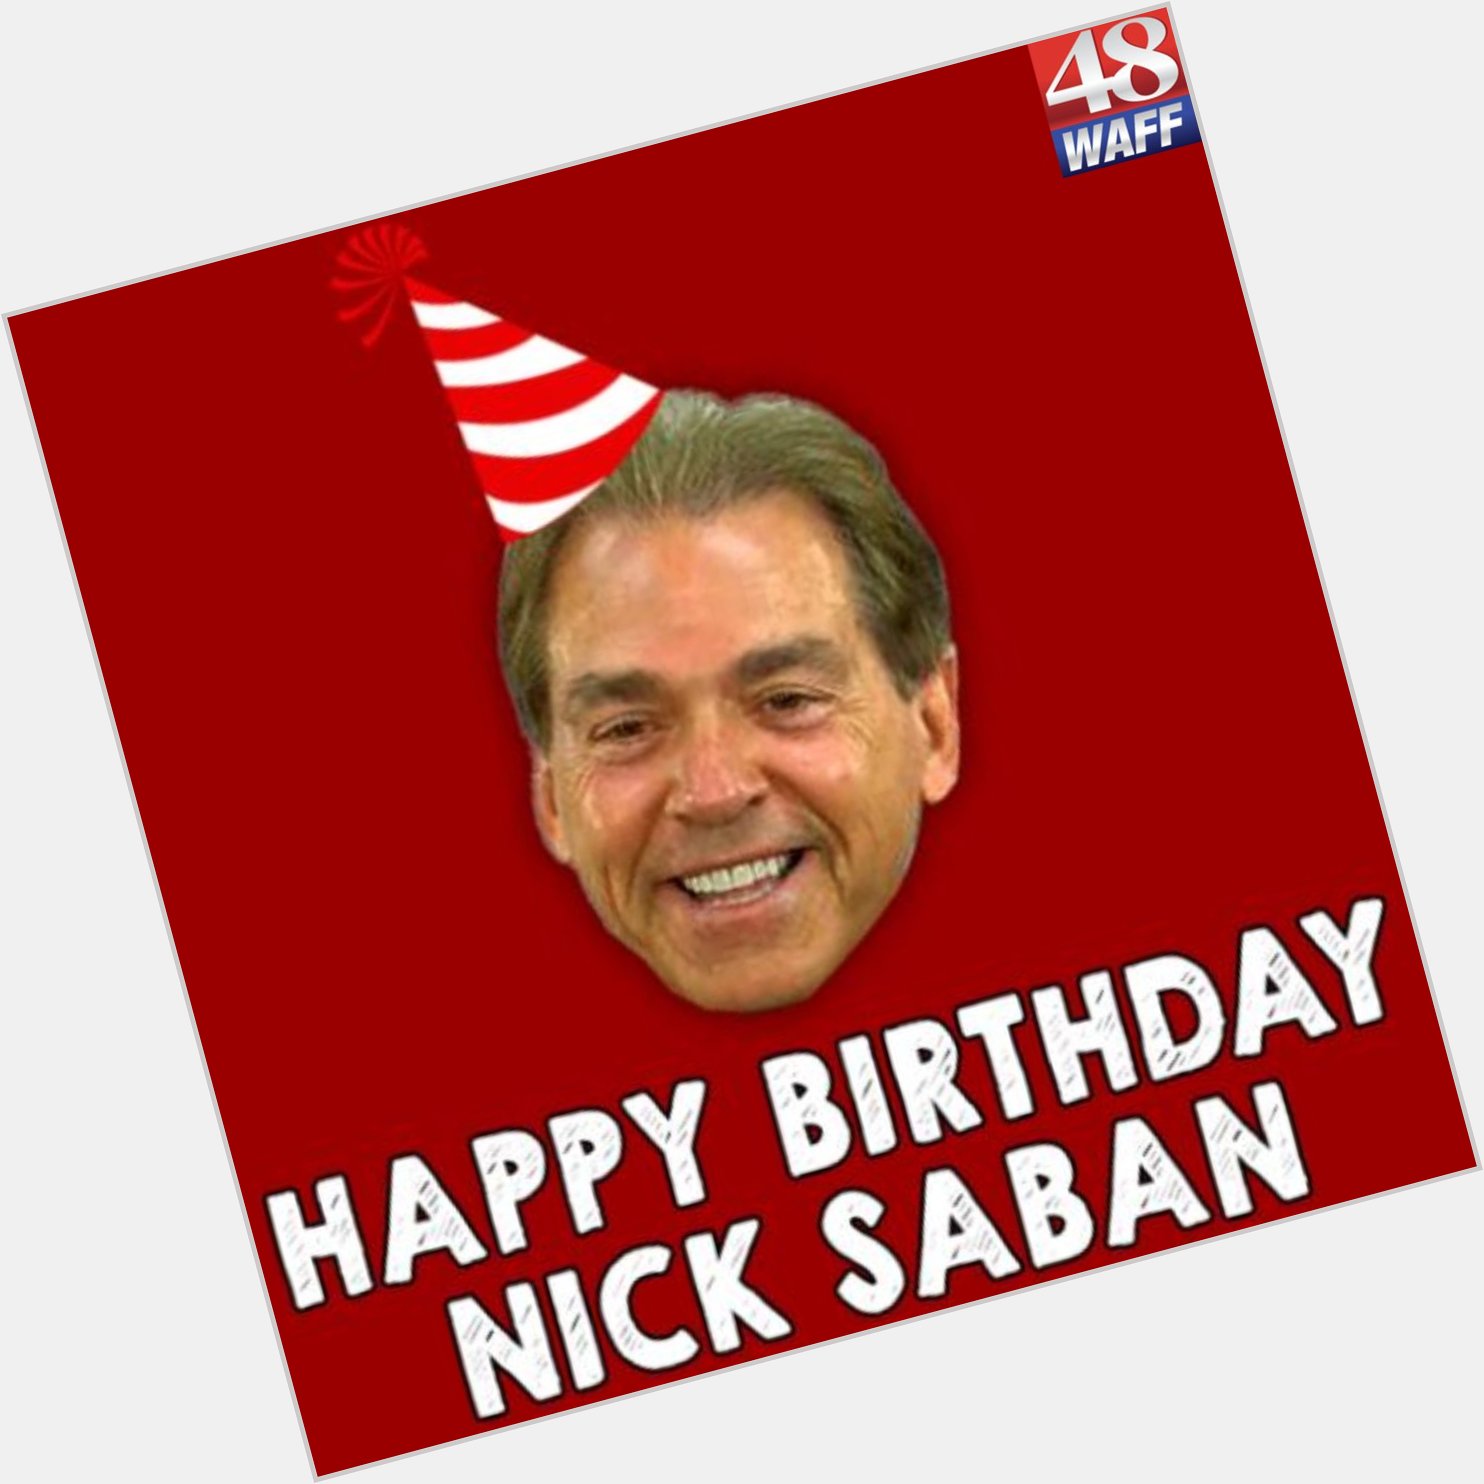 Nick Saban turns 70 today! Happy birthday, coach!
>>>>  